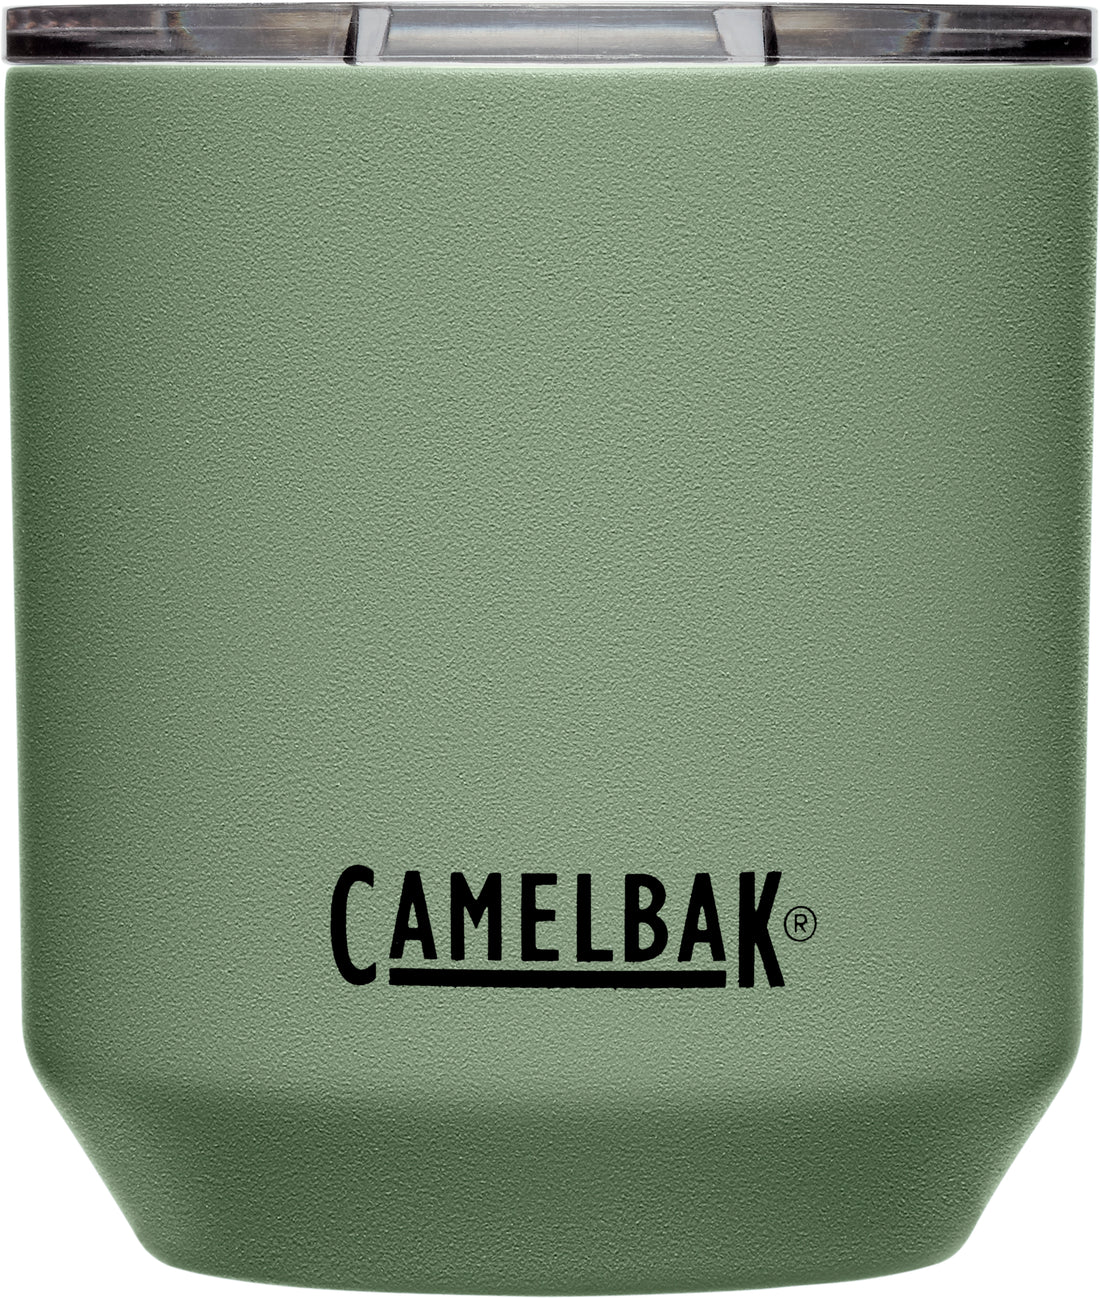 Camelbak|ROCKS_TUMBLER|Cycle_LM